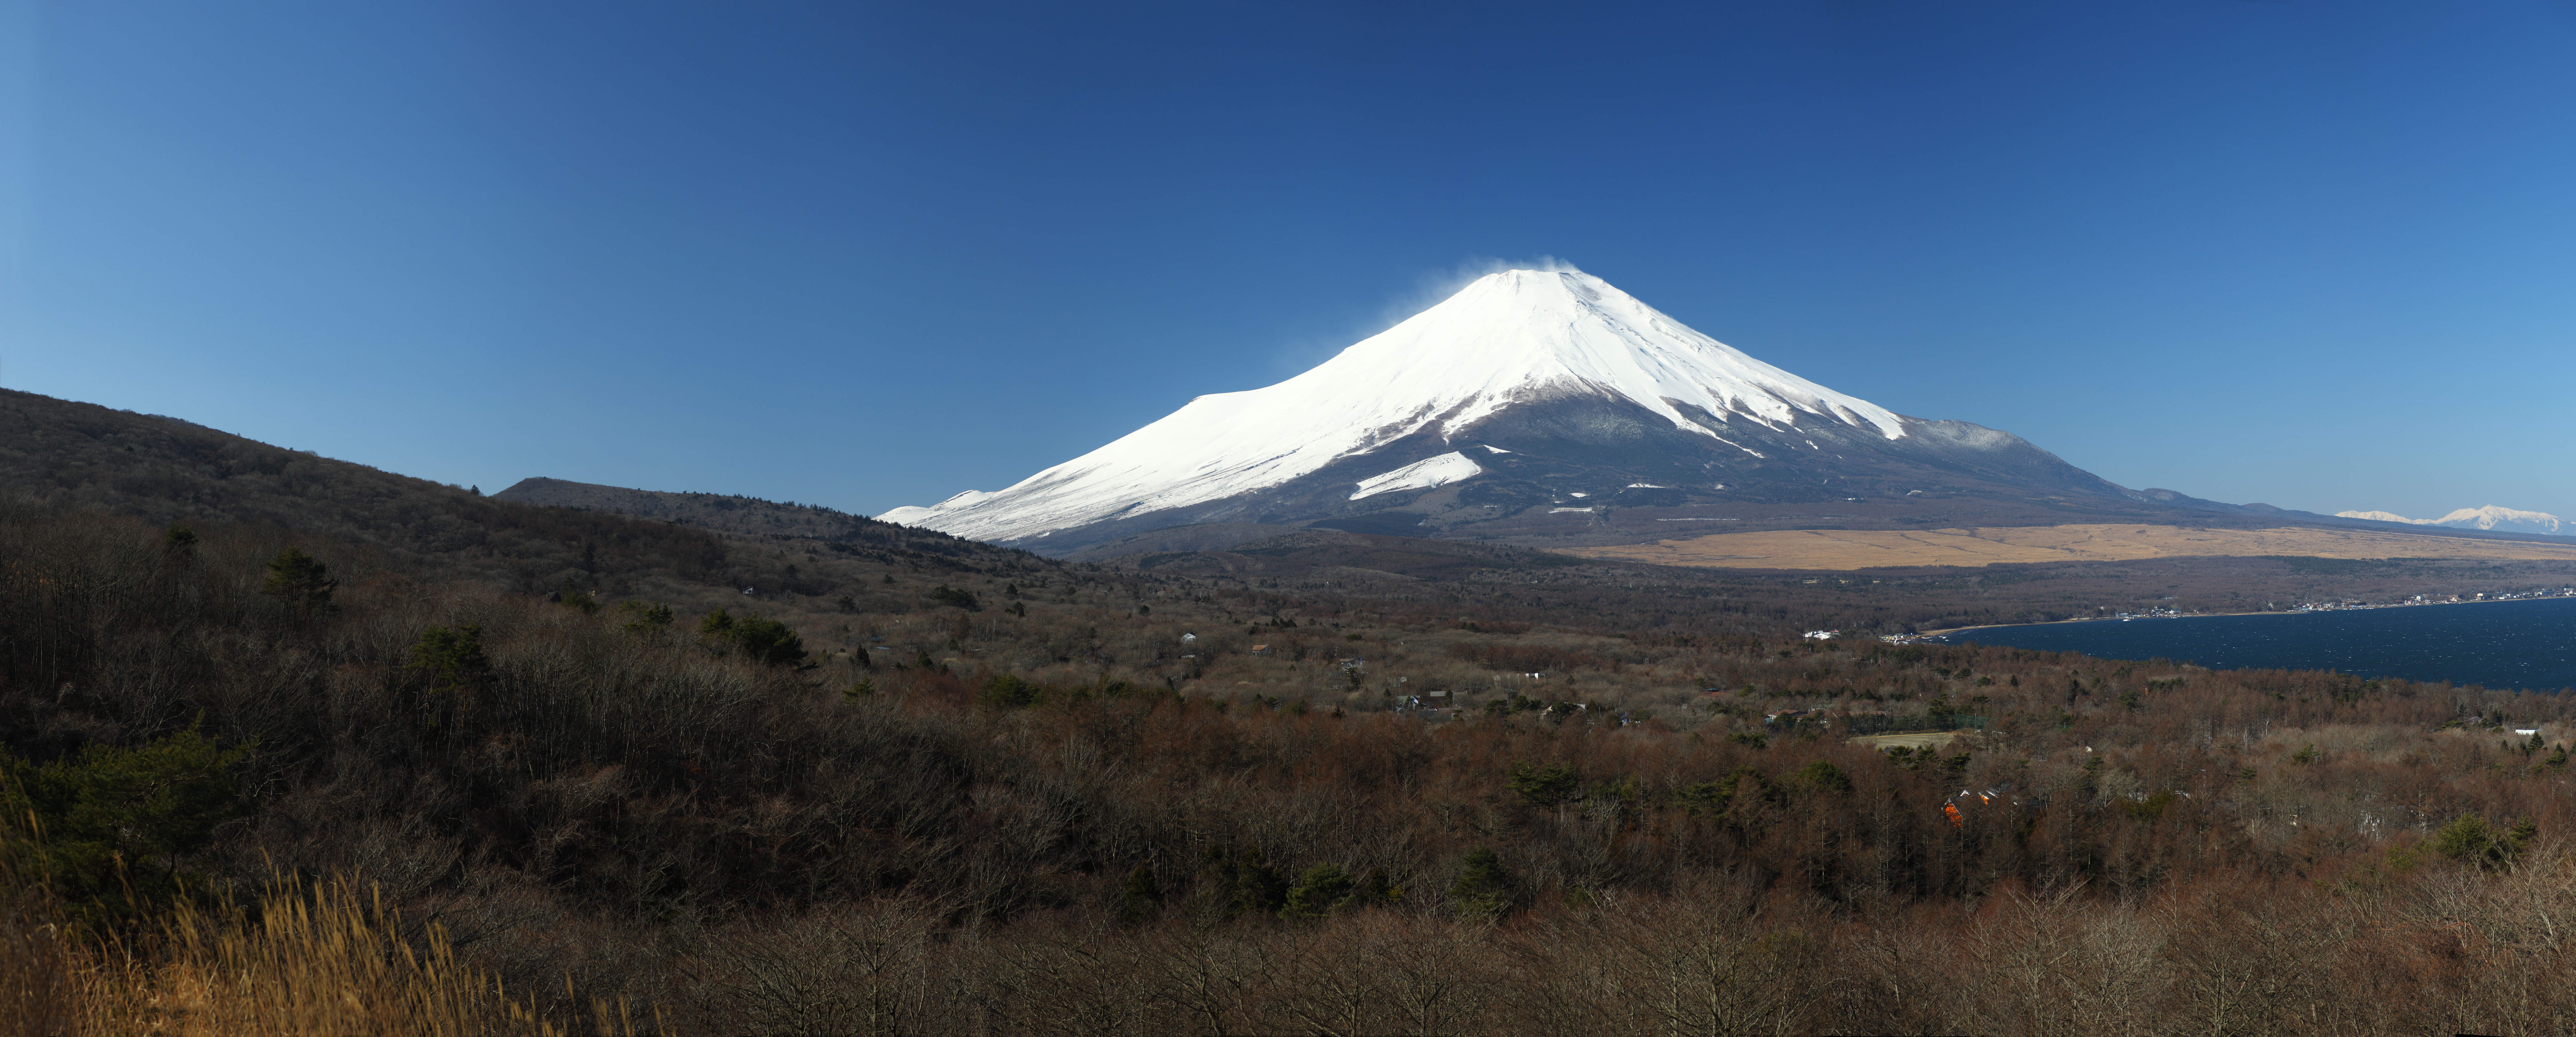 fotografia, materiale, libero il panorama, dipinga, fotografia di scorta,Mt. Fuji, Mt. Fuji, Yamanakako, , 